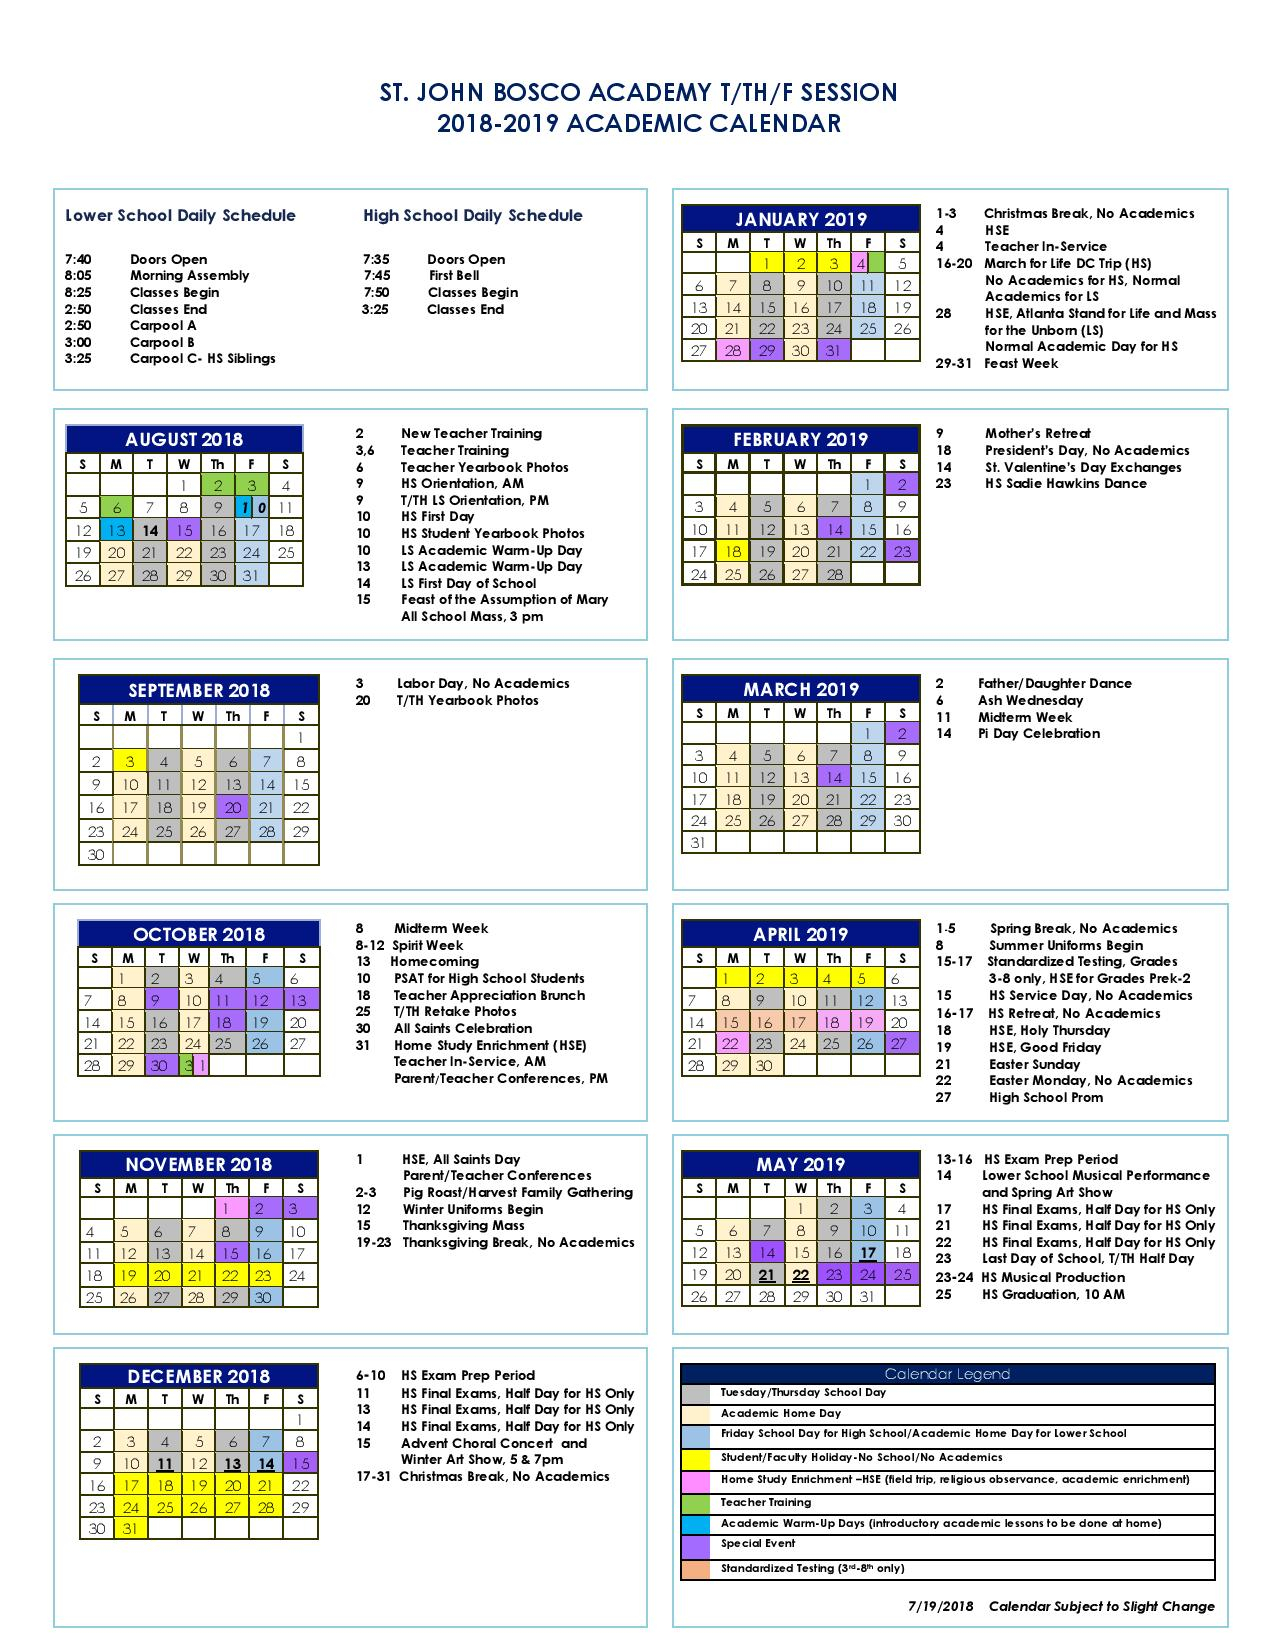 Academic Calendar St John s University Universitycalendars net